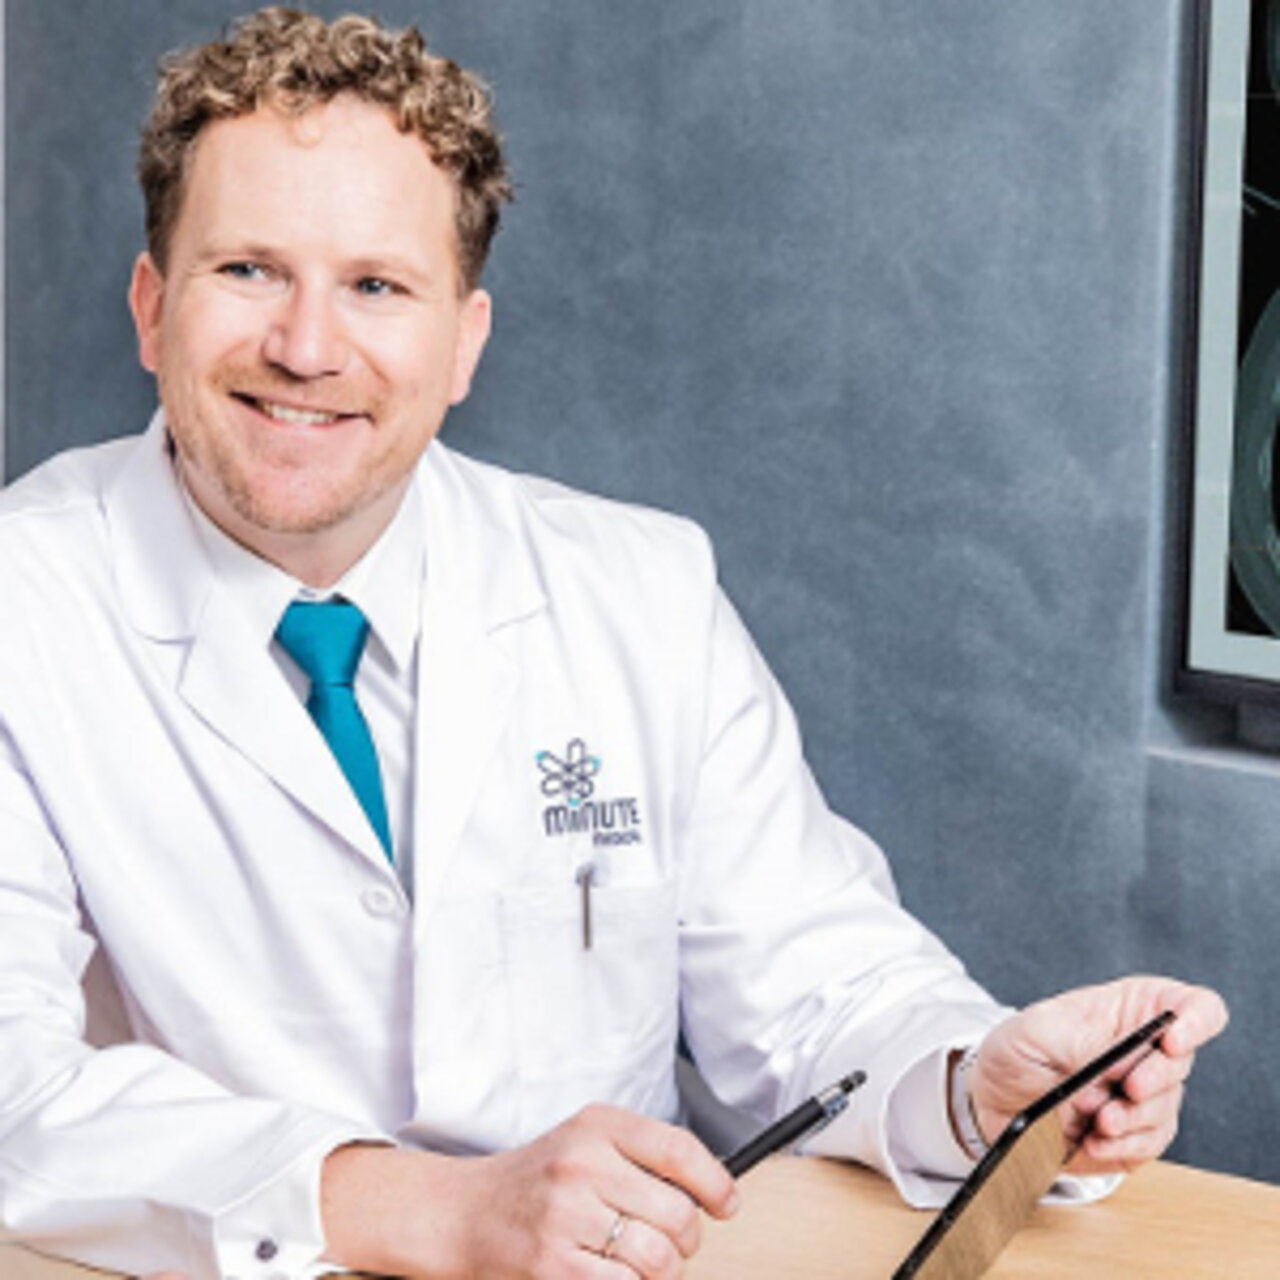 MINUTE medical – Prof. Dr Markus Hartenbach - Portrait